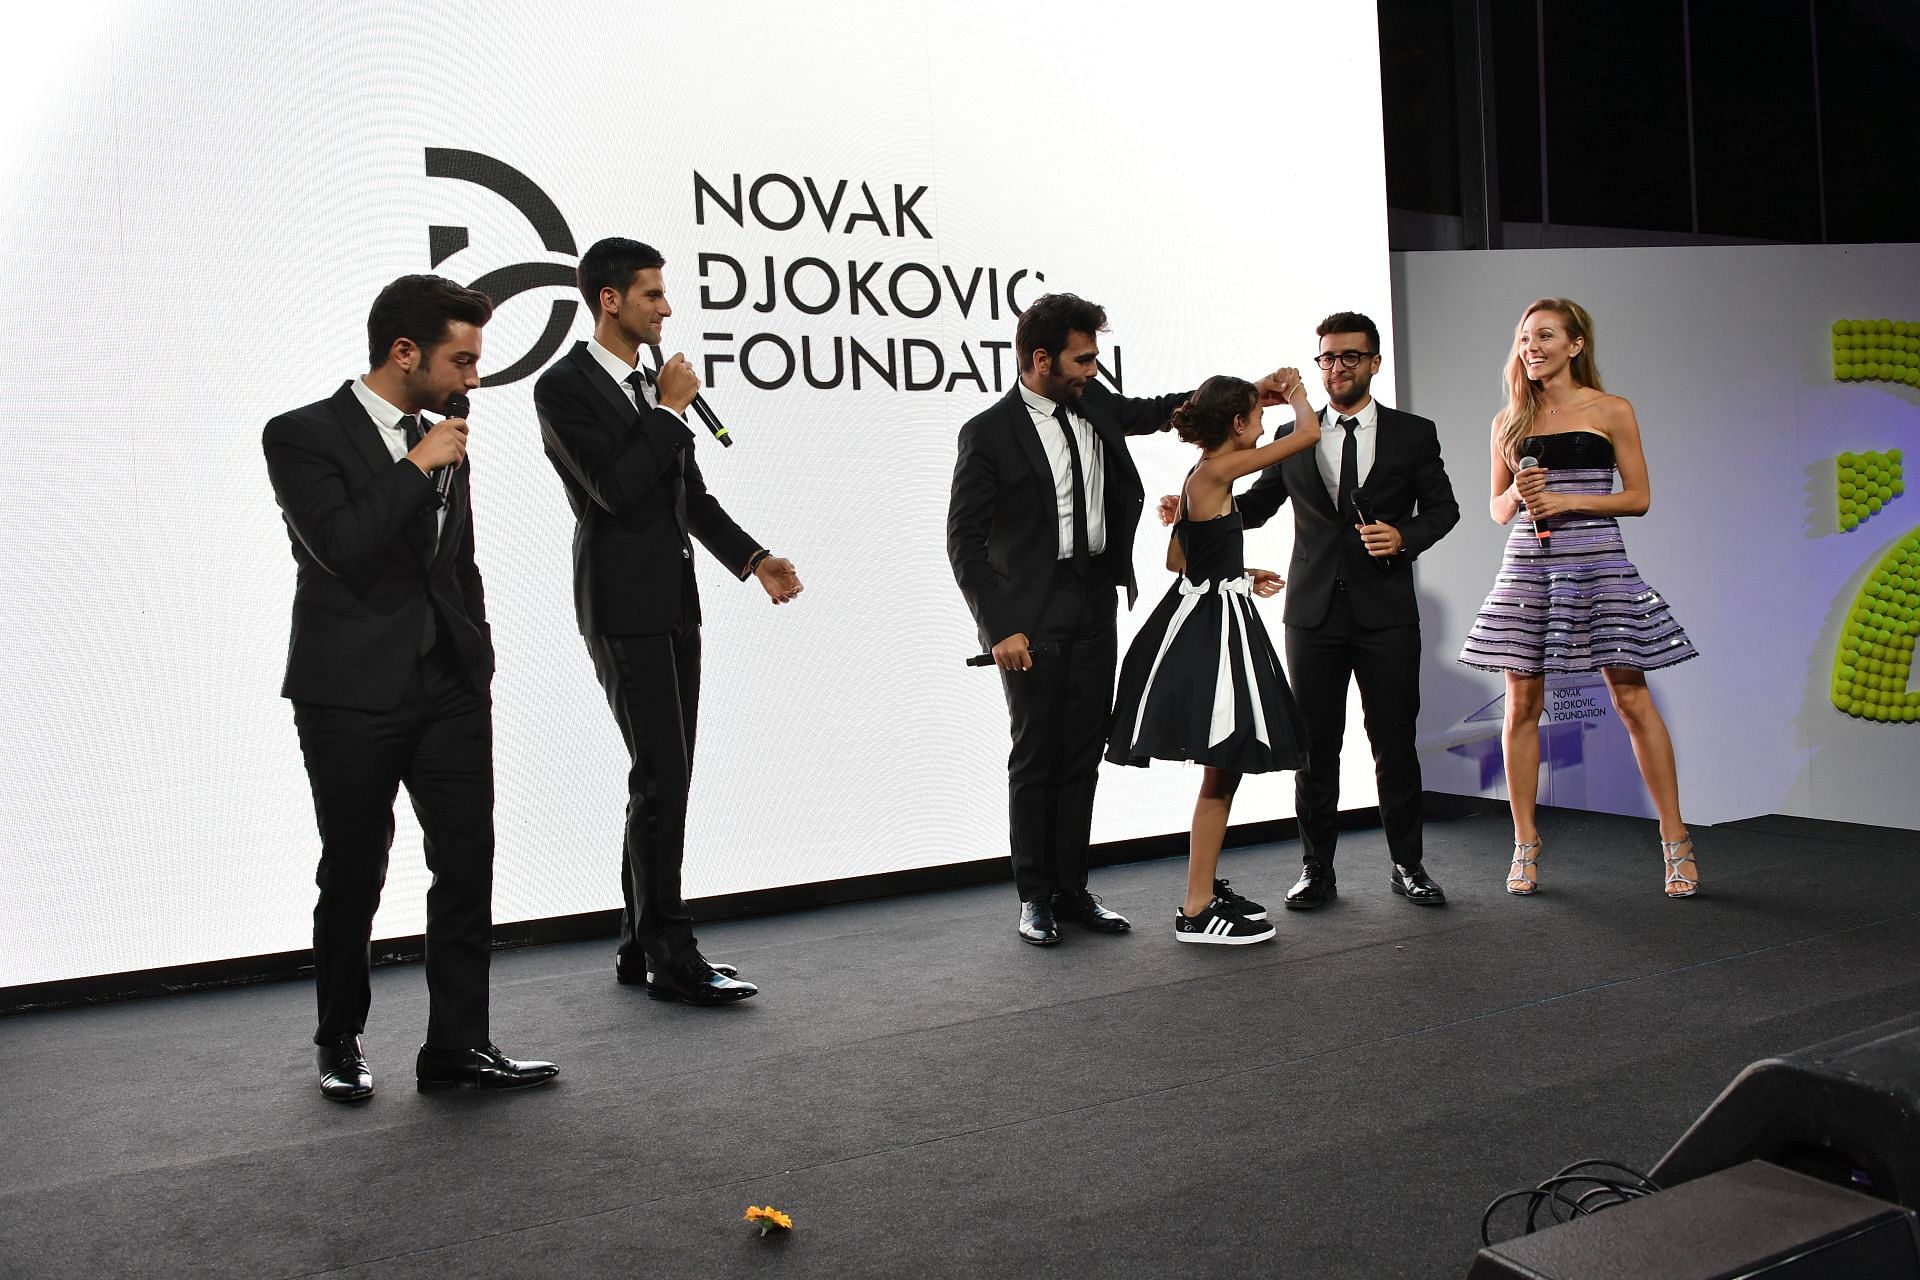 Novak Djokovic Foundation aims to cut the waiting list by providing preschool study rooms to Serbian children in Odzaci